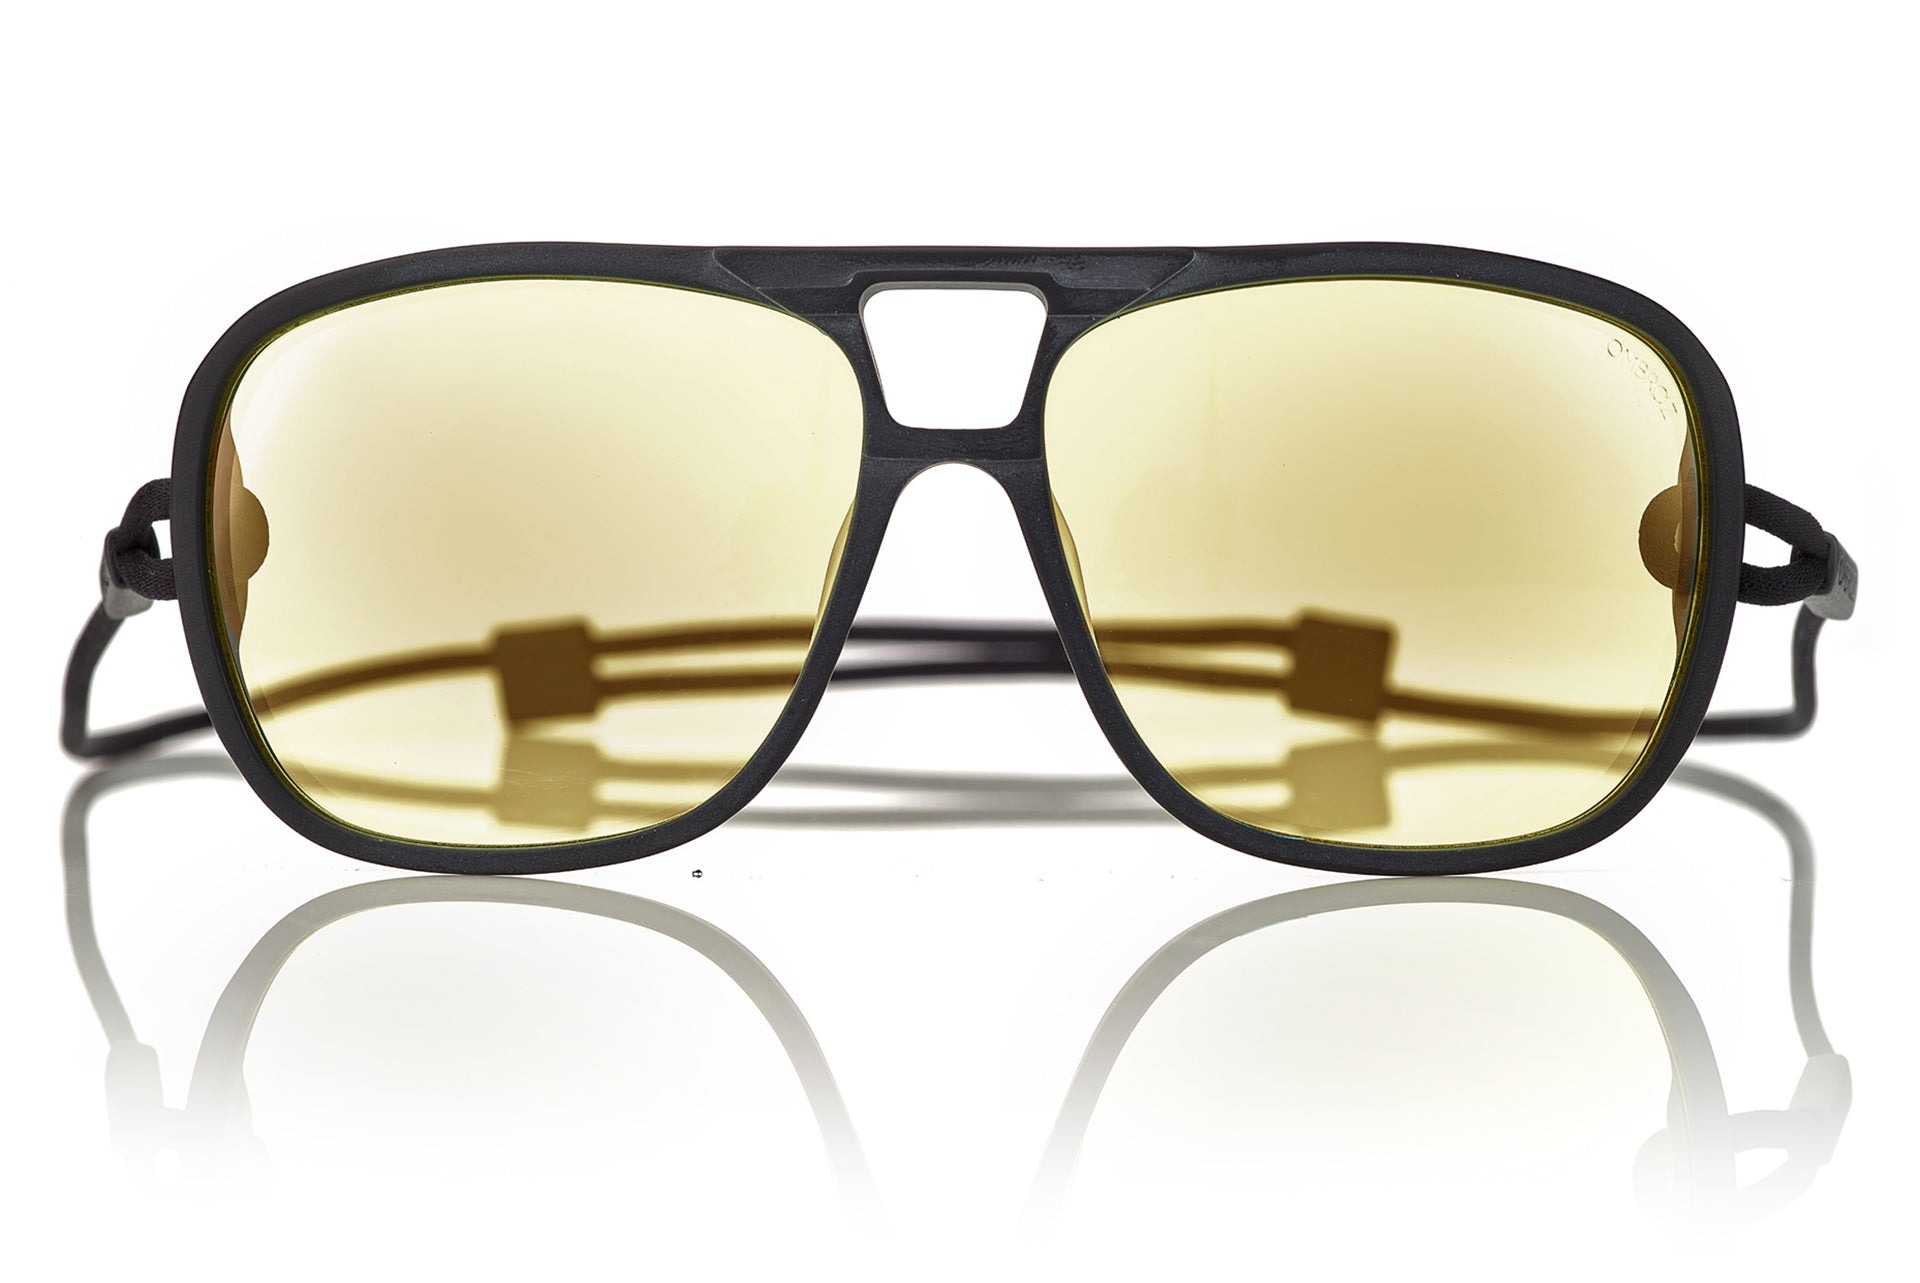 leggero_charcoal_blocker Close up of Ombraz leggero armless sunglasses with strap